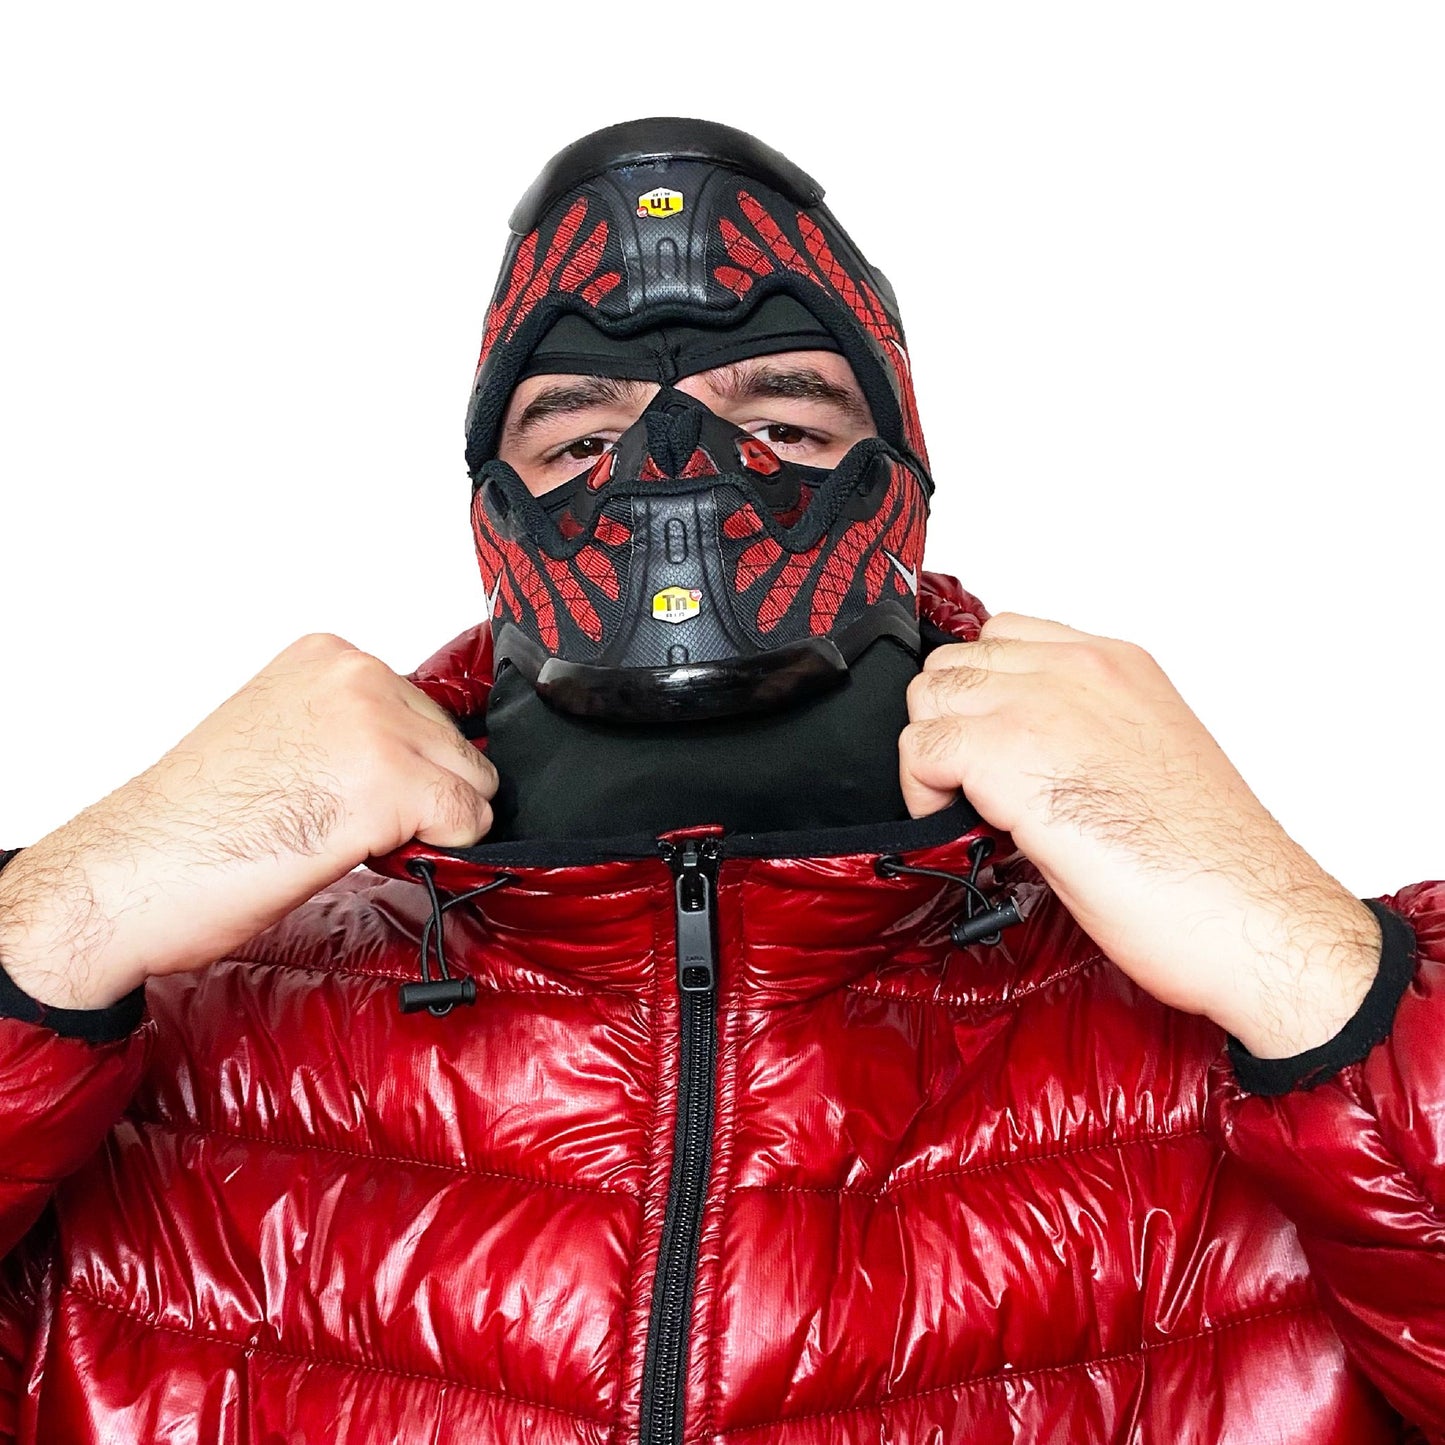 Air Max Tn Deadpool Full Face Mask